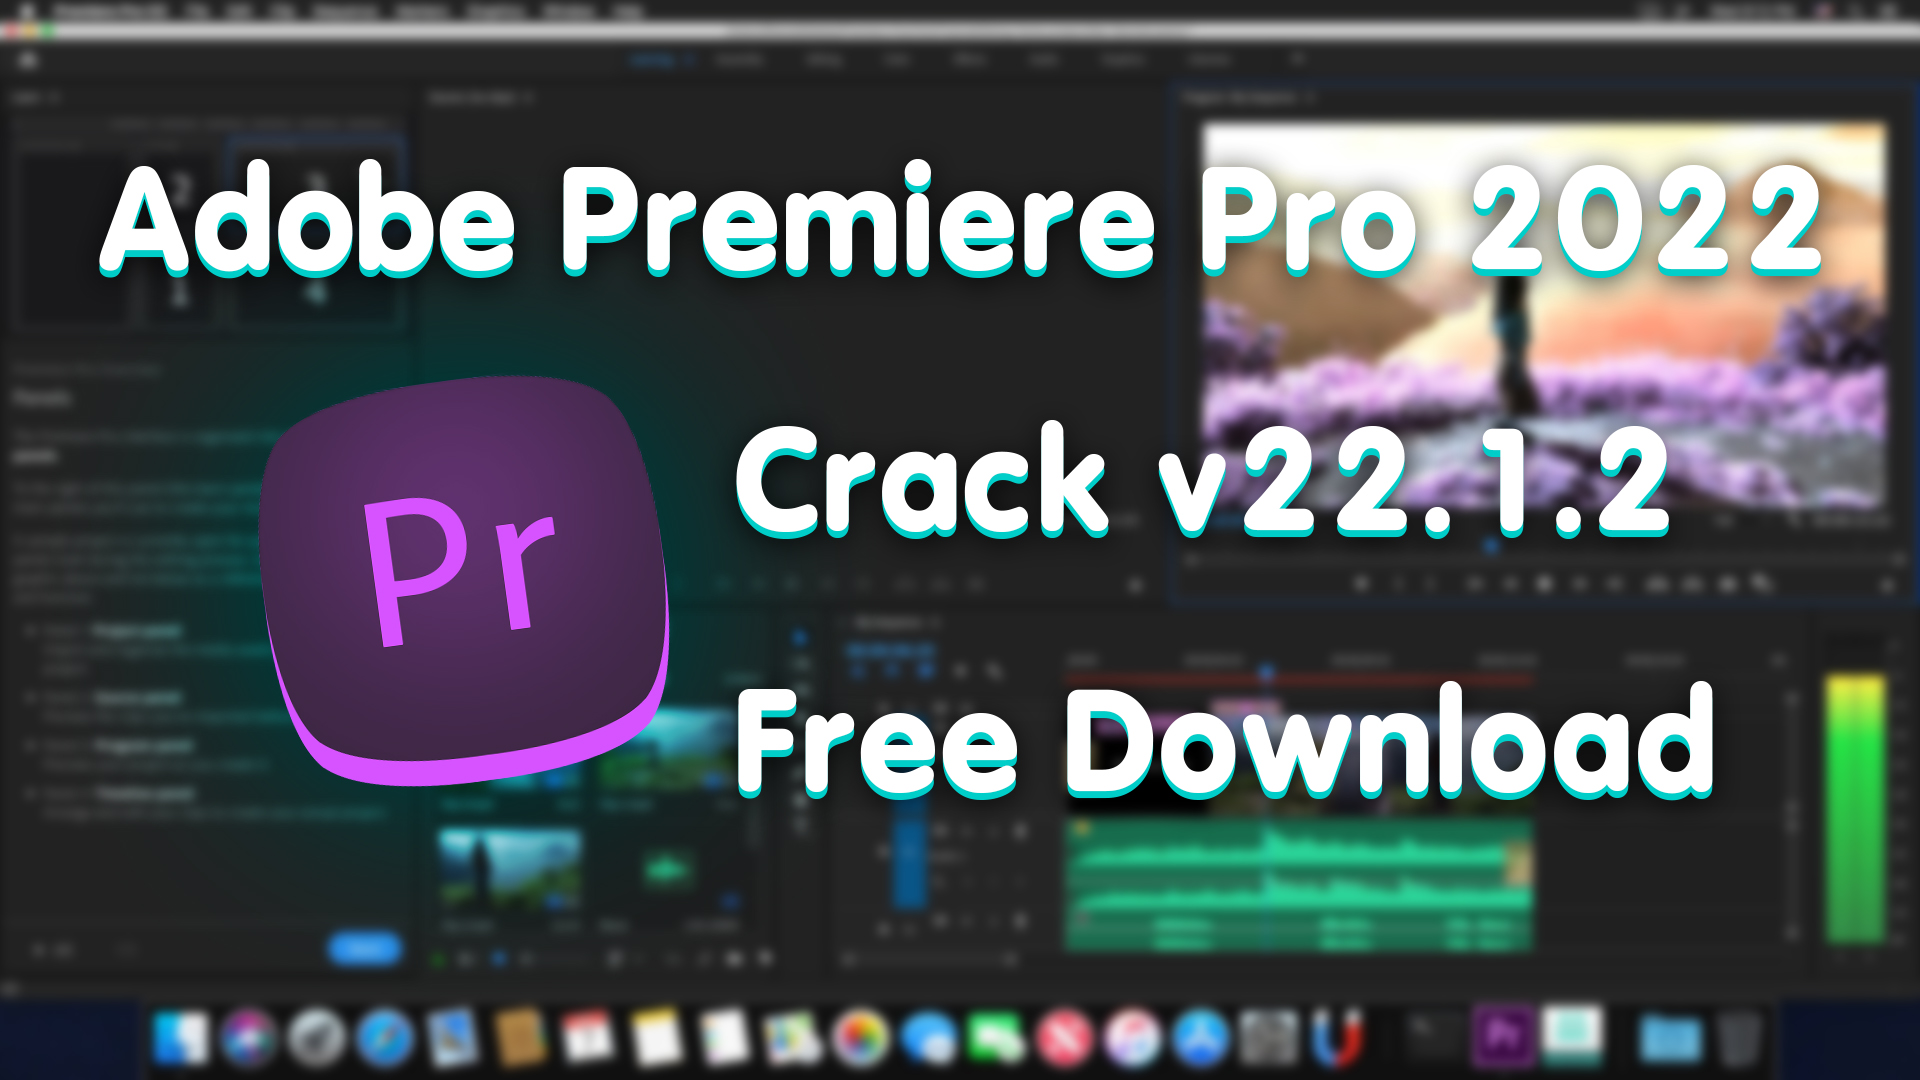 Download Adobe Premiere Pro 2022 Crack v22.1.2 For Mac & Windows